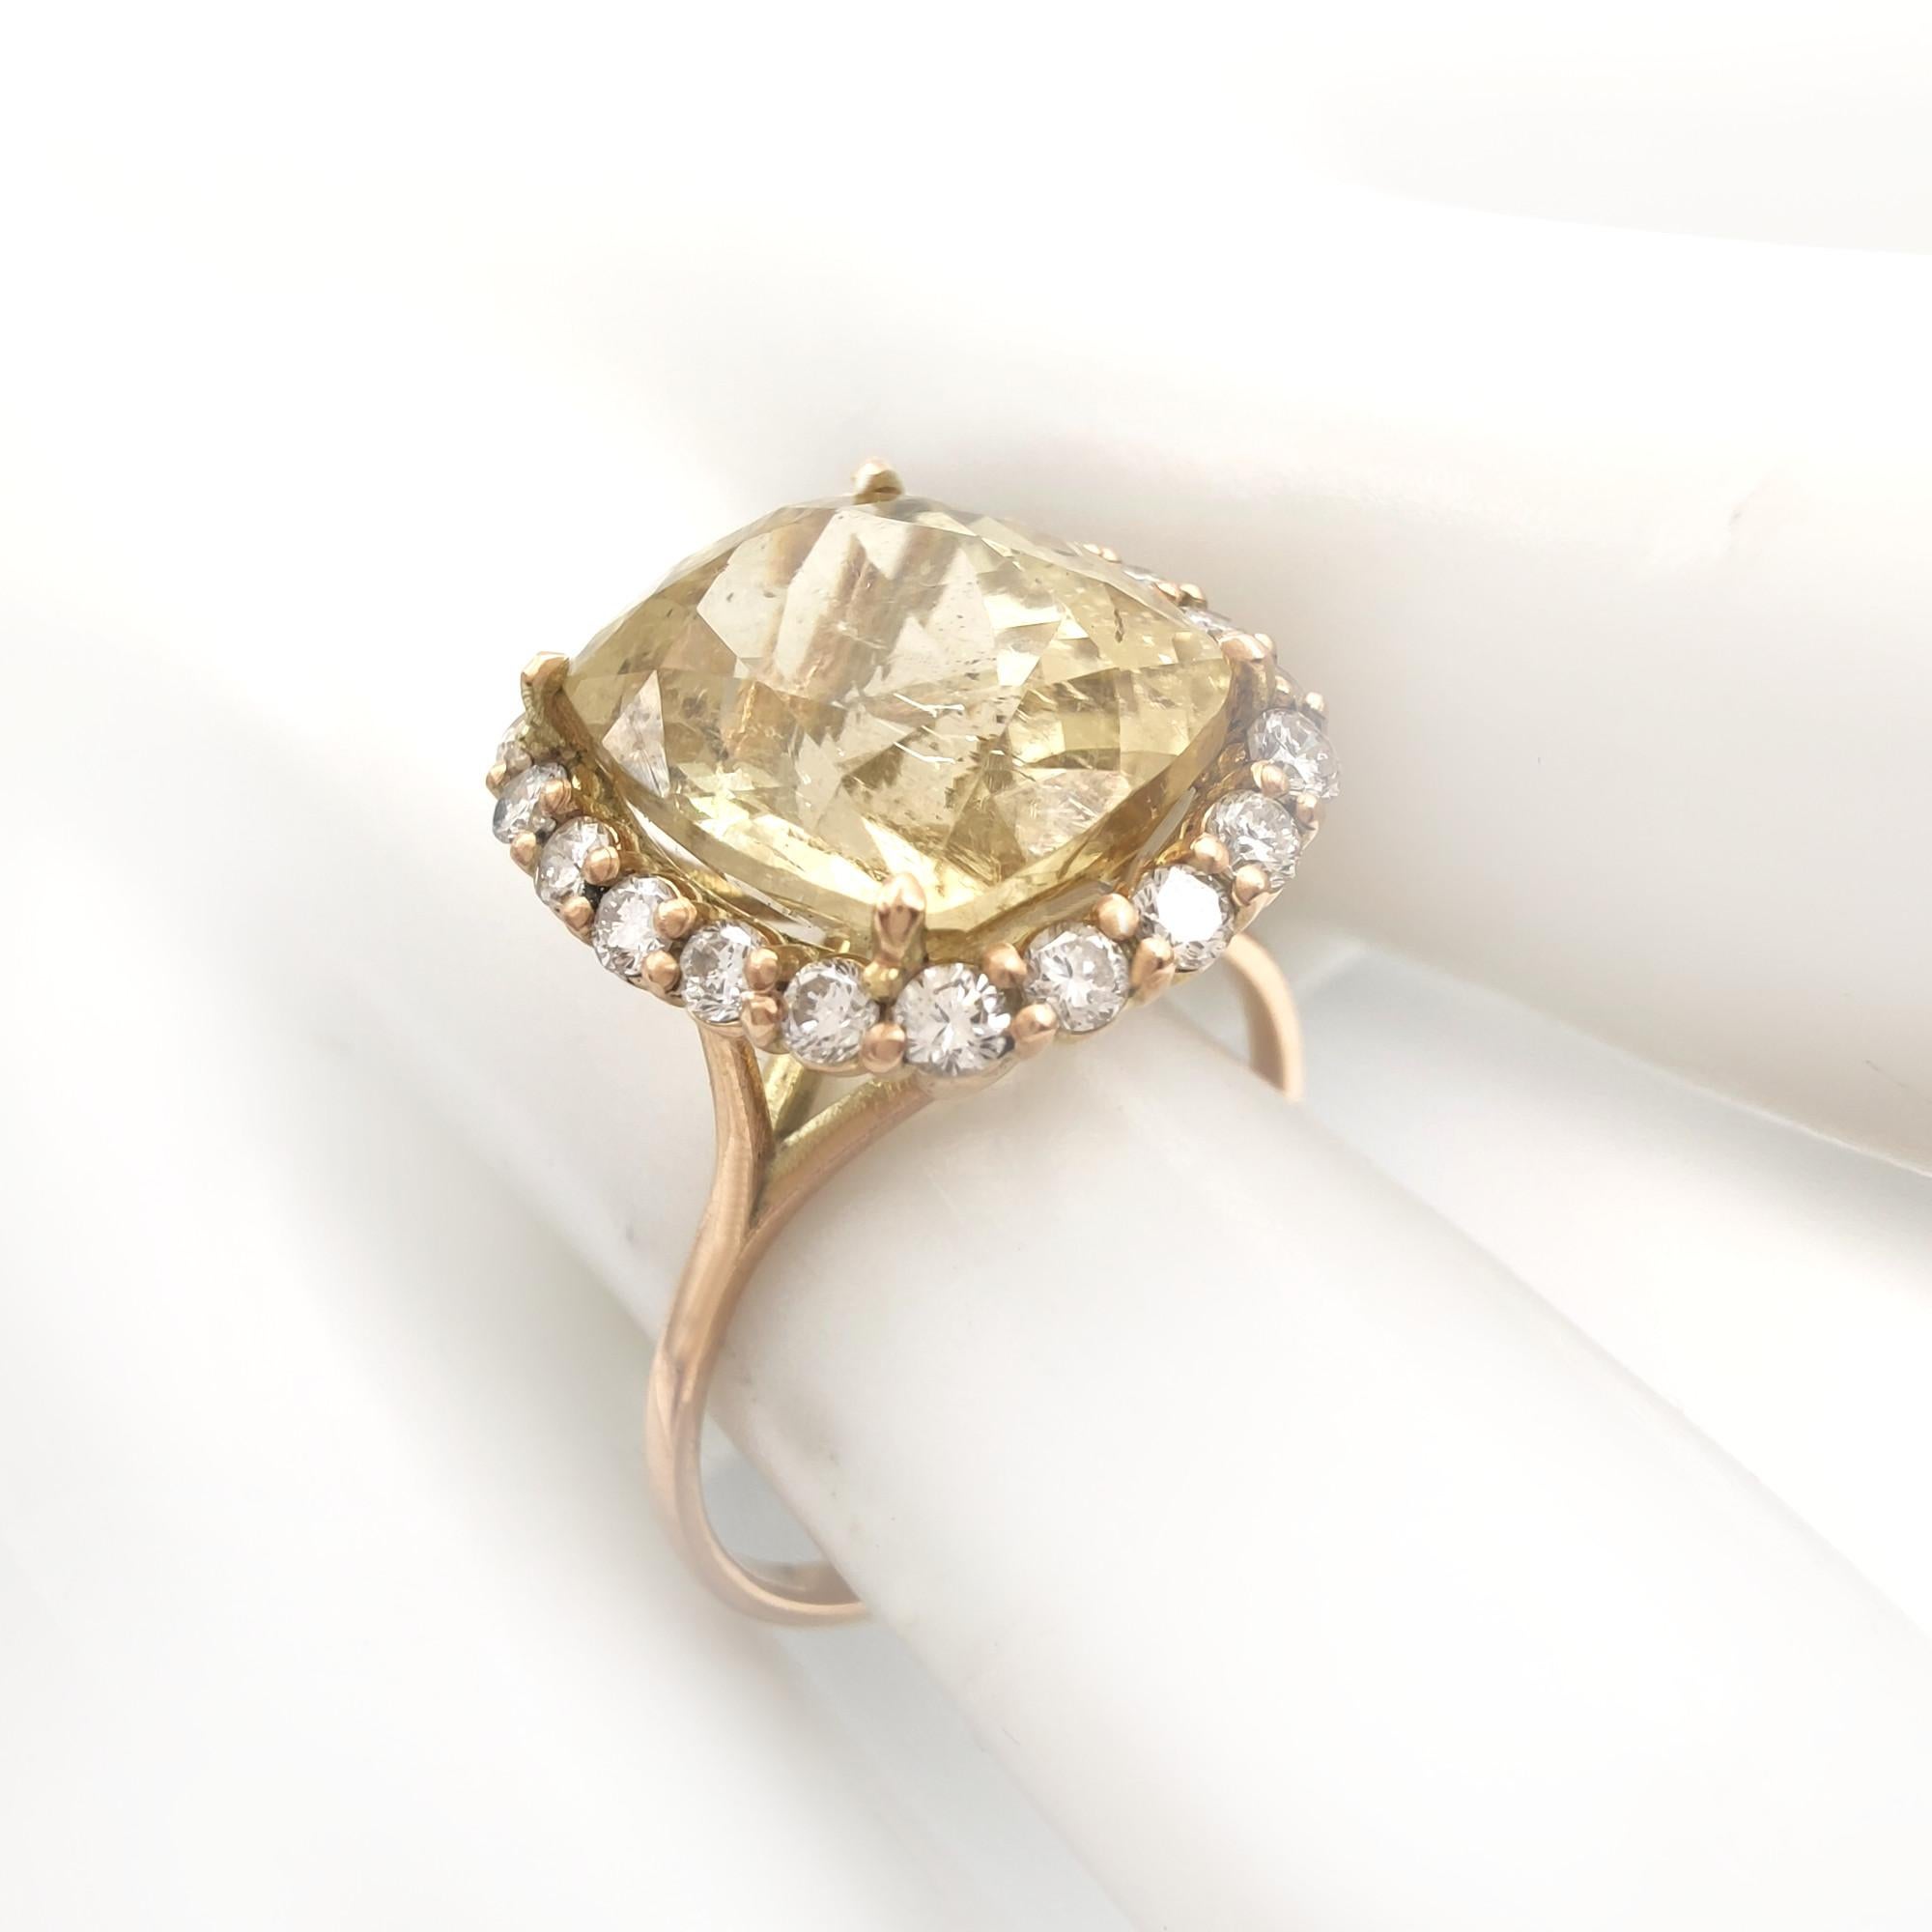 Classical Roman Gemstone 14k gold ring  Certified Tourmaline Diamond Gemstone Halo Cocktail ring